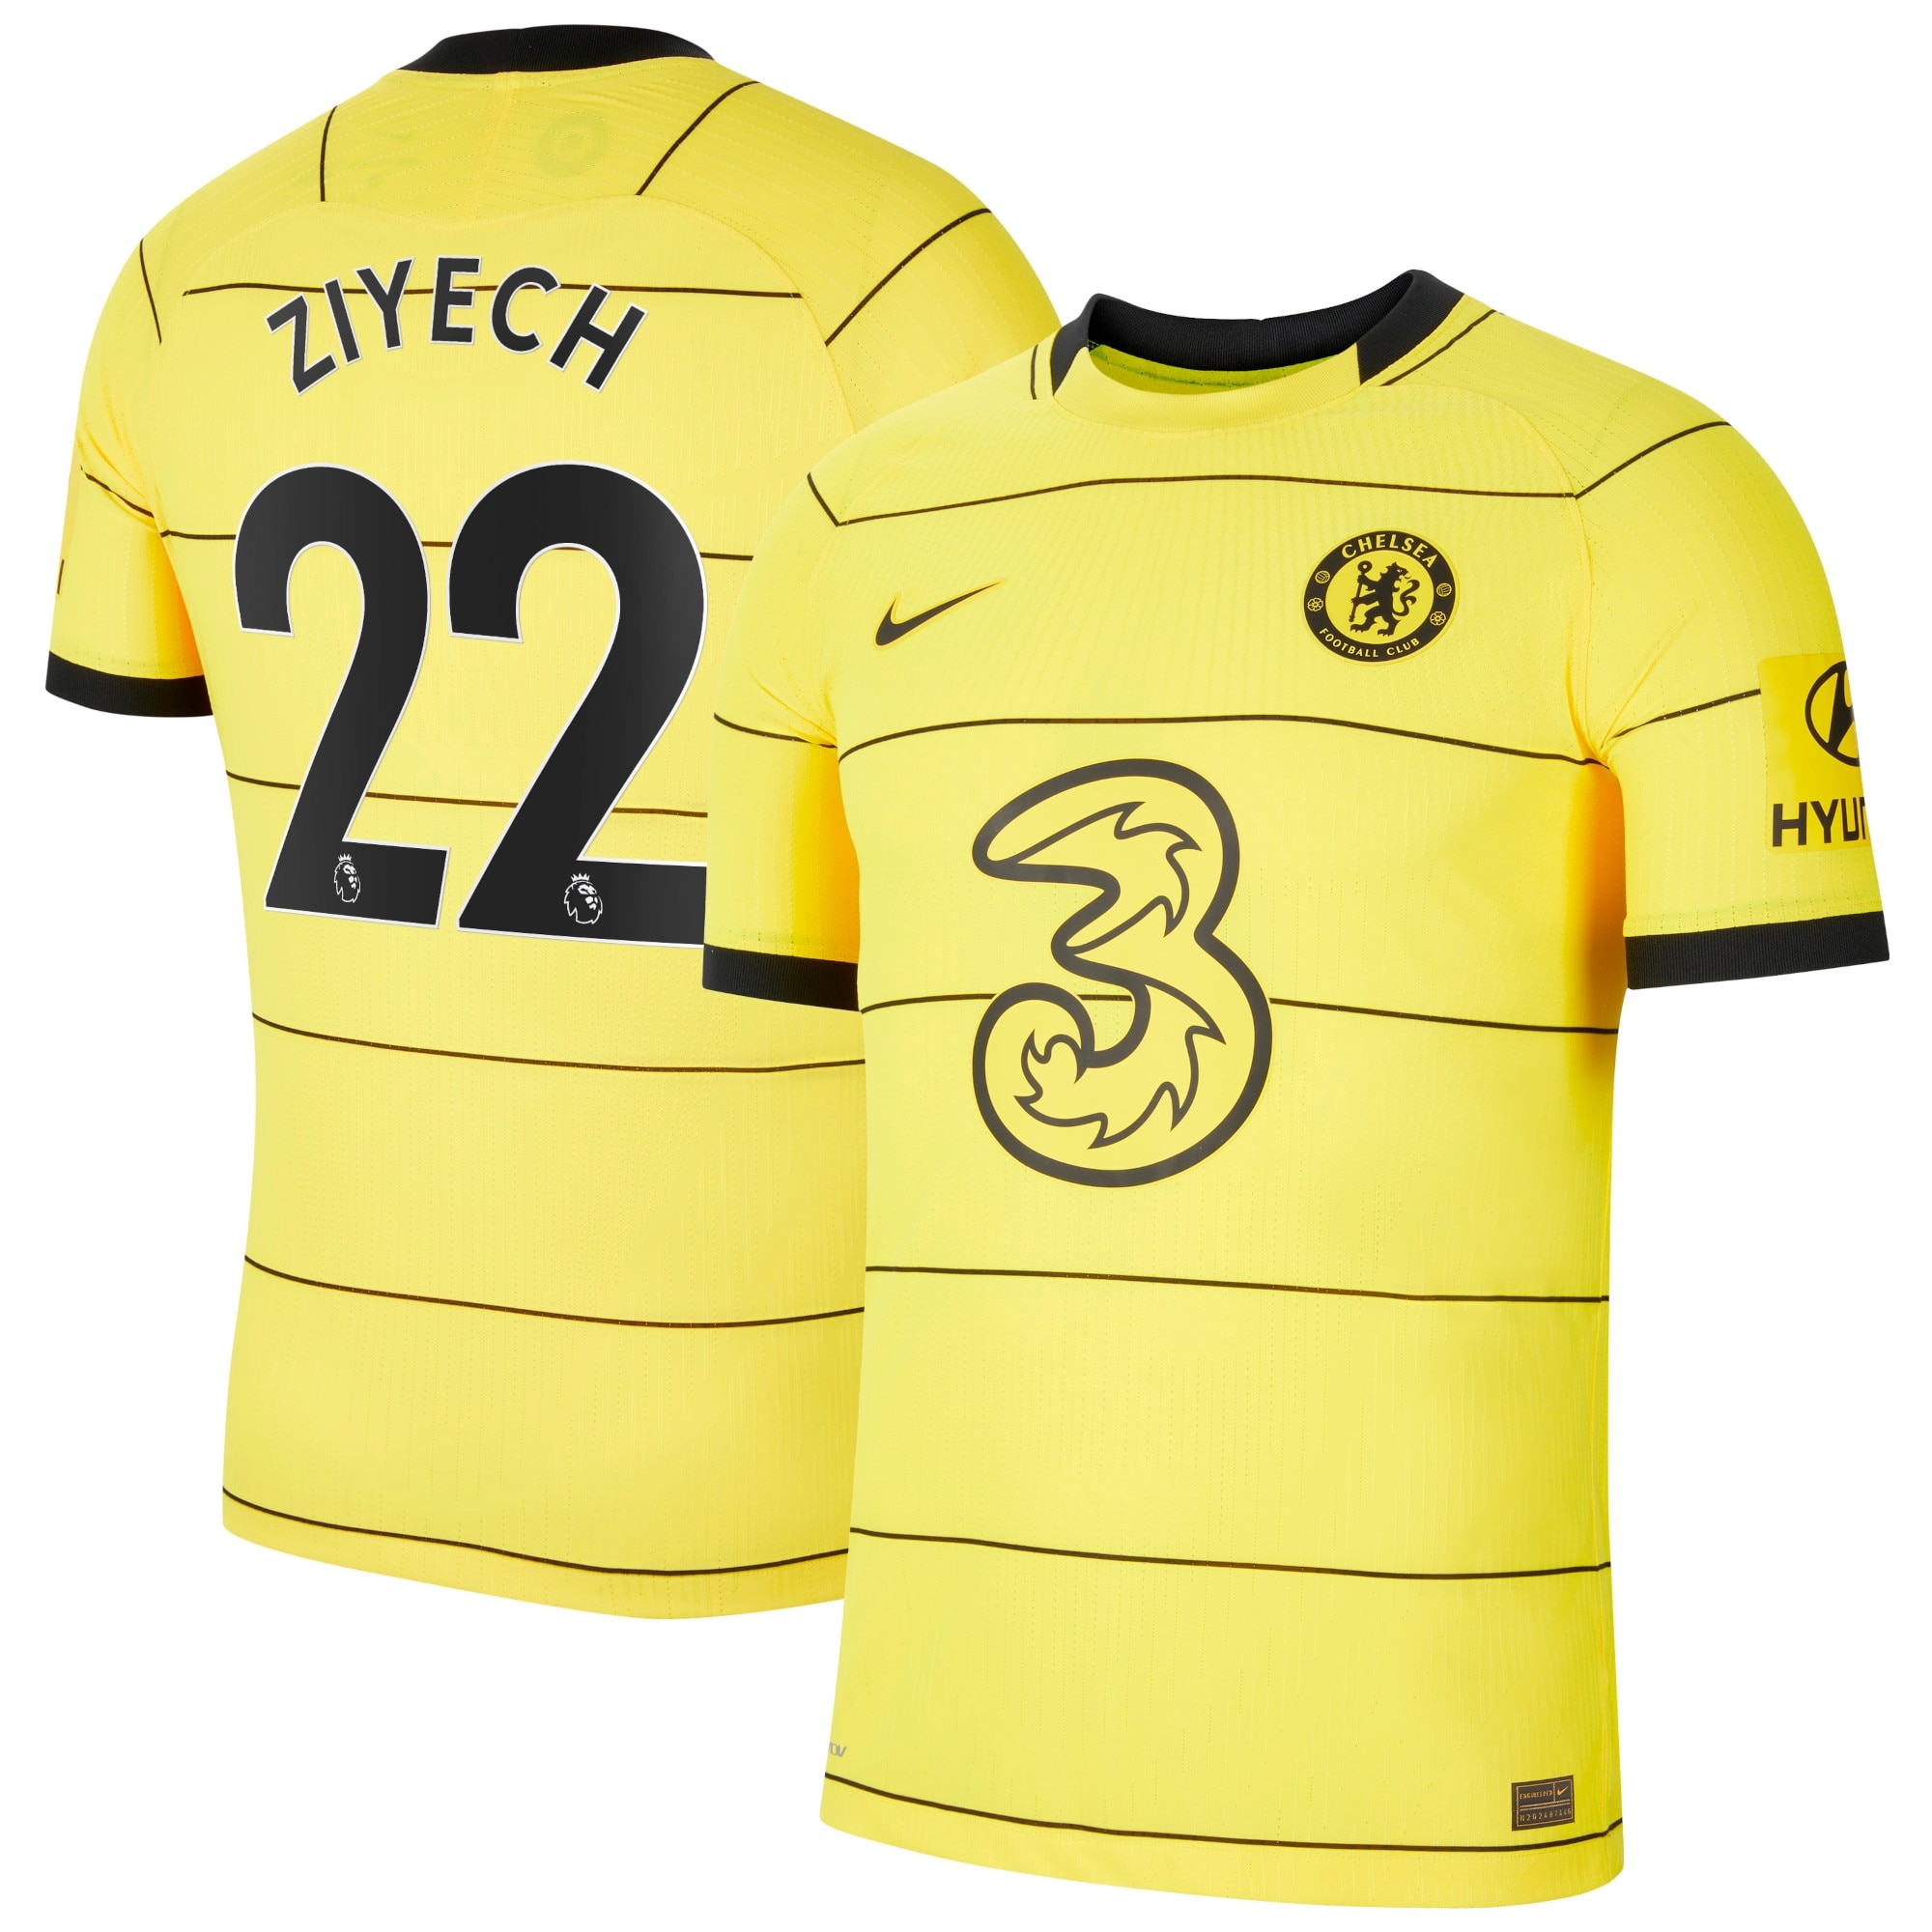 Chelsea Away Vapor Match Shirt 2021-22 with Ziyech 22 printing